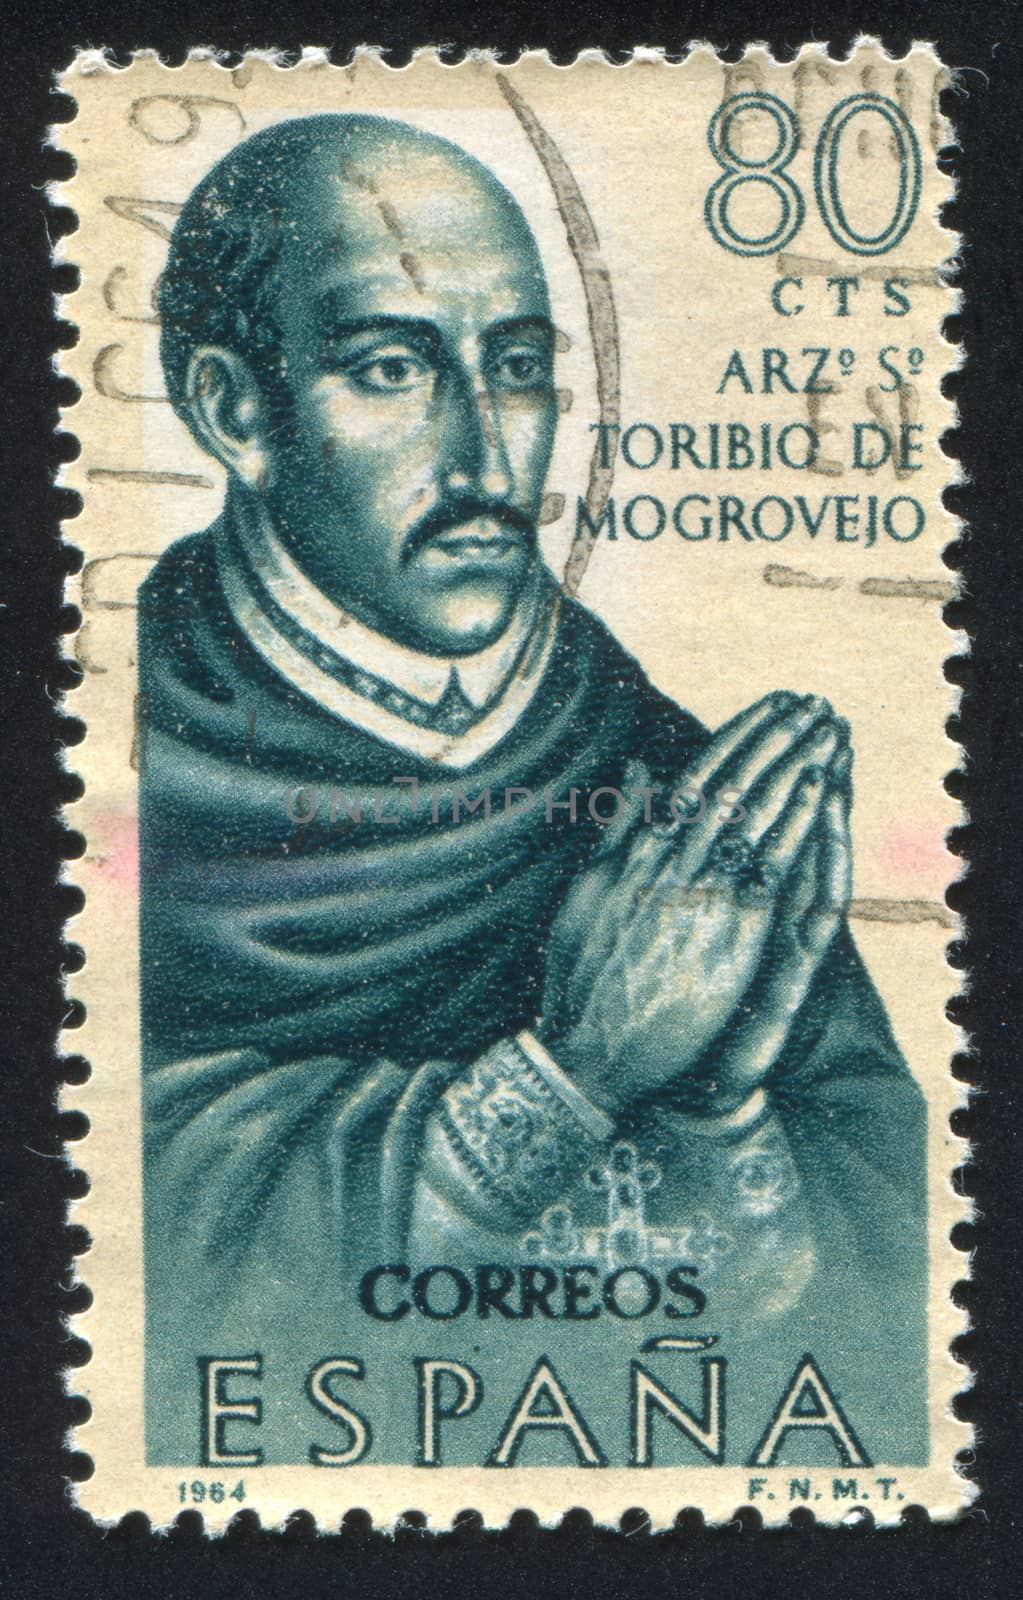 SPAIN - CIRCA 1964: stamp printed by Spain, shows Portrait of Archbishop Toribio de Mogrovejo, circa 1964